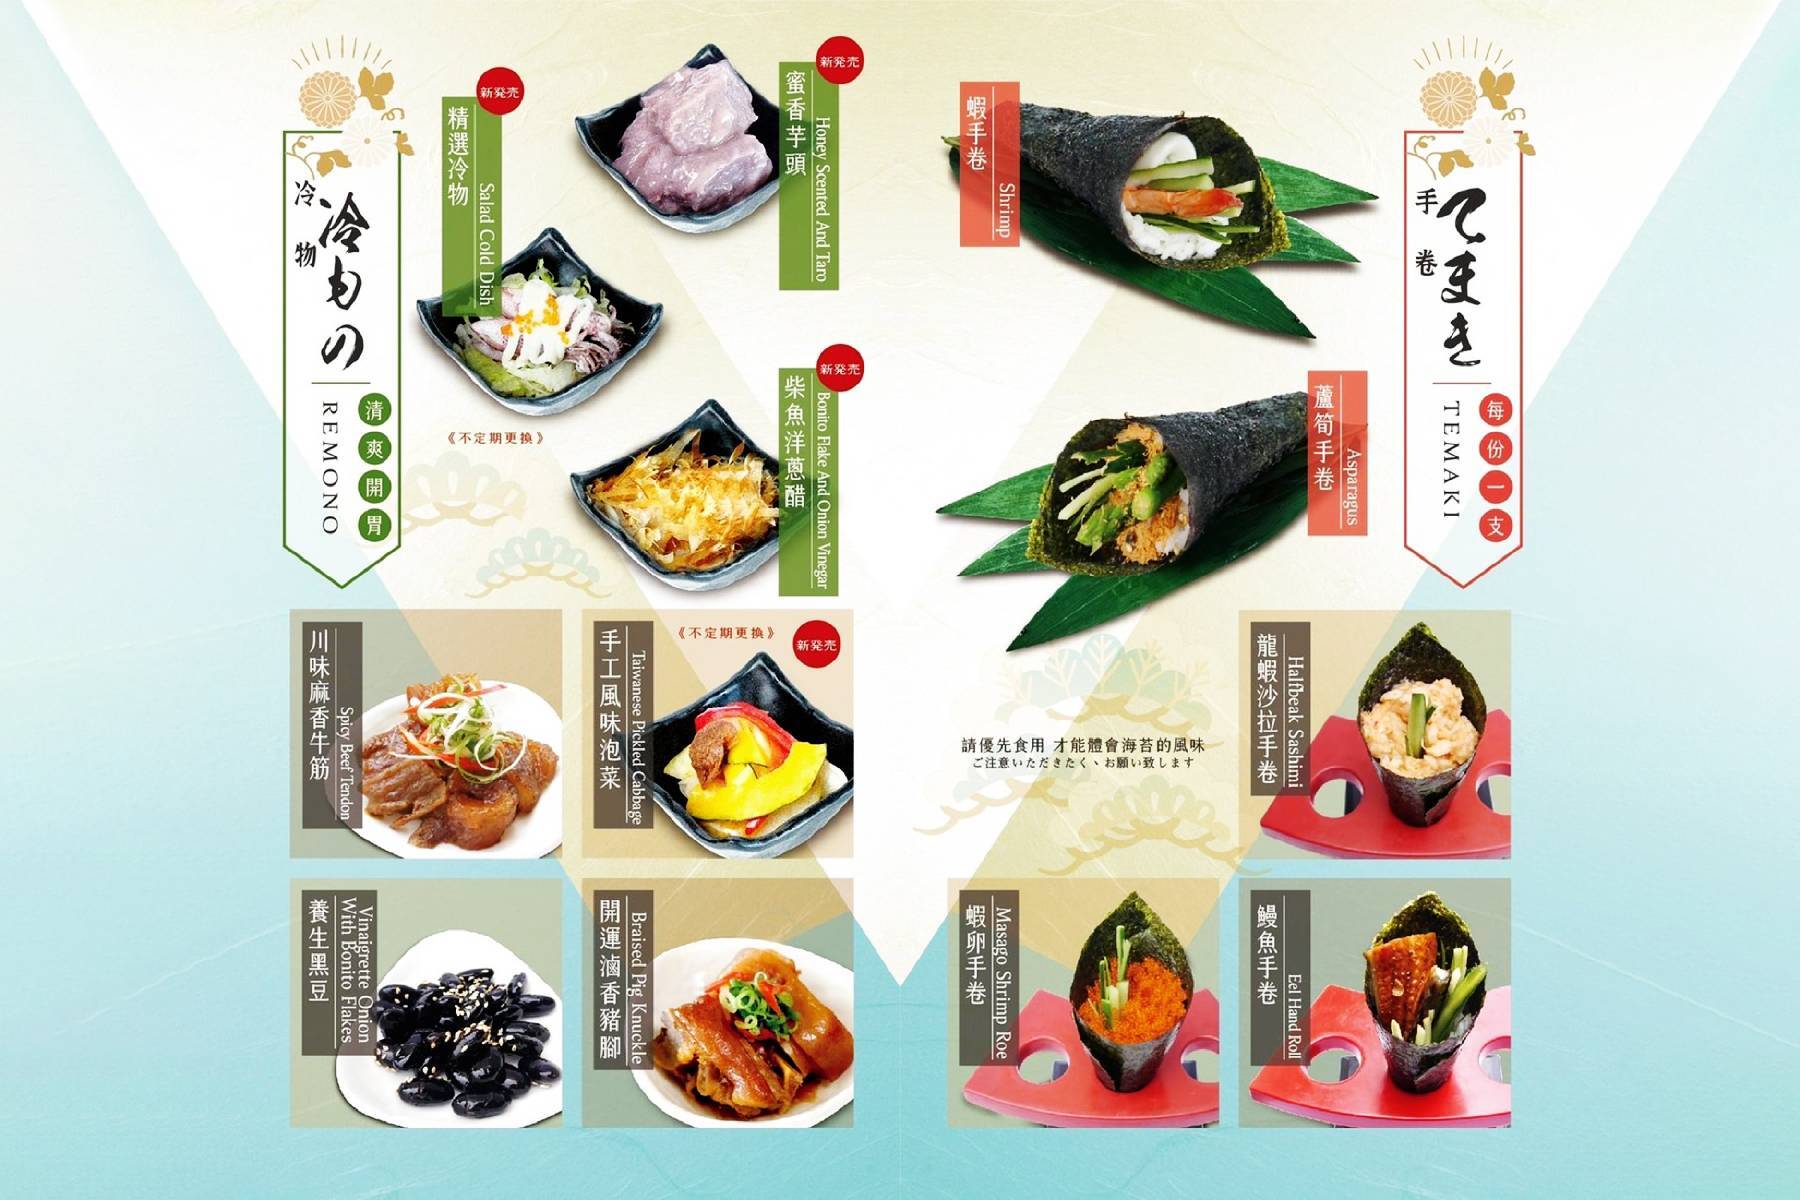 ●Soto日式精緻料理-平日午餐A餐吃到飽7